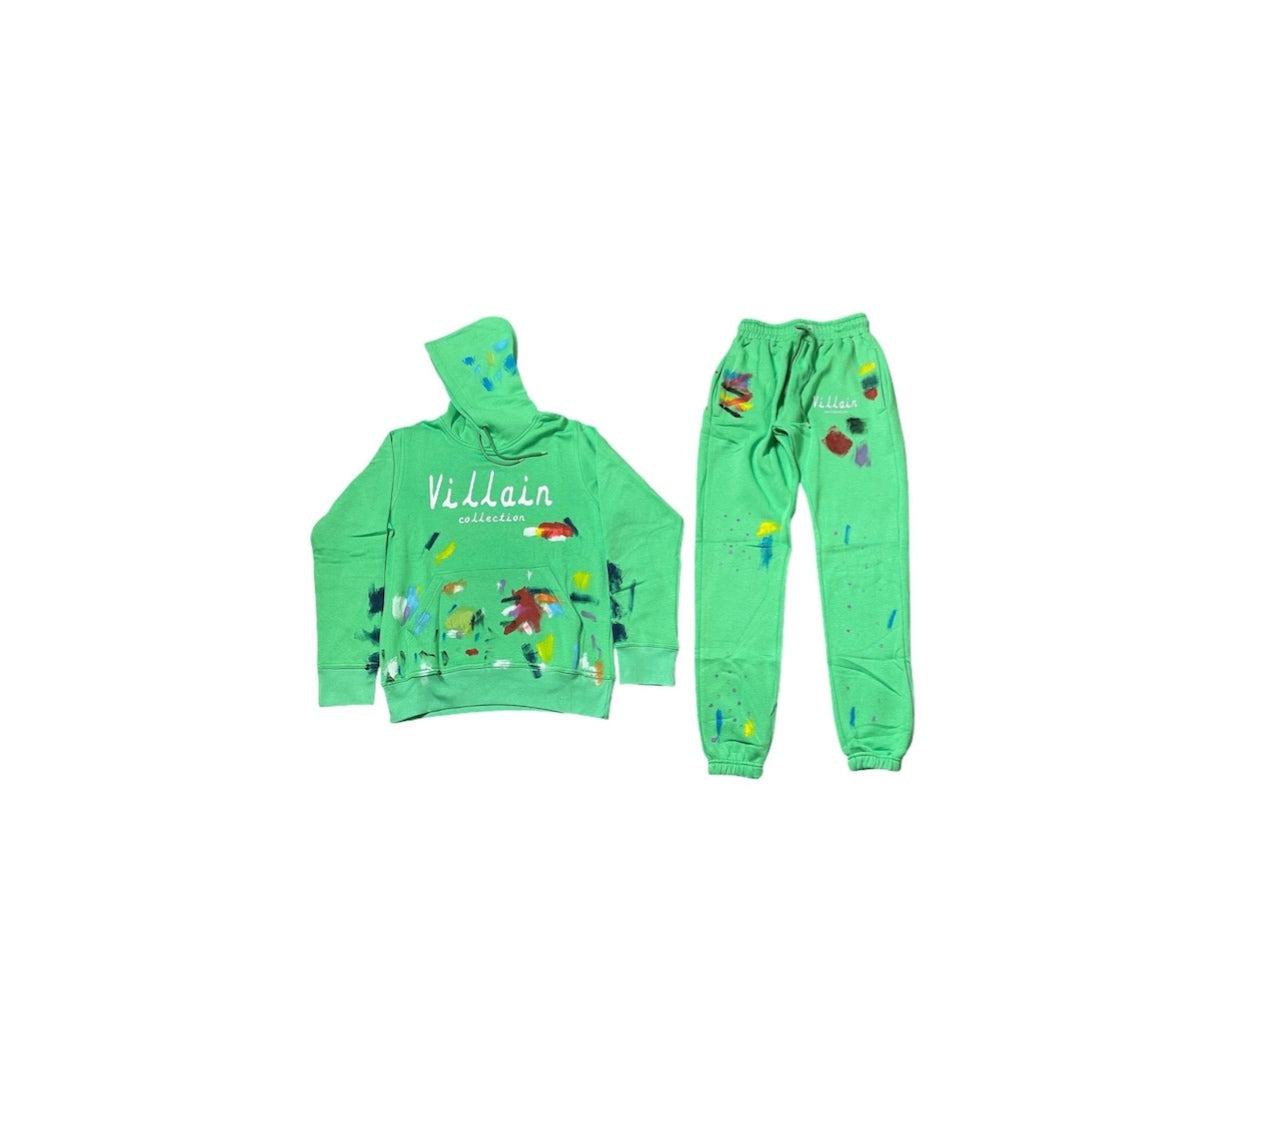 Green “Painter” sweatsuit